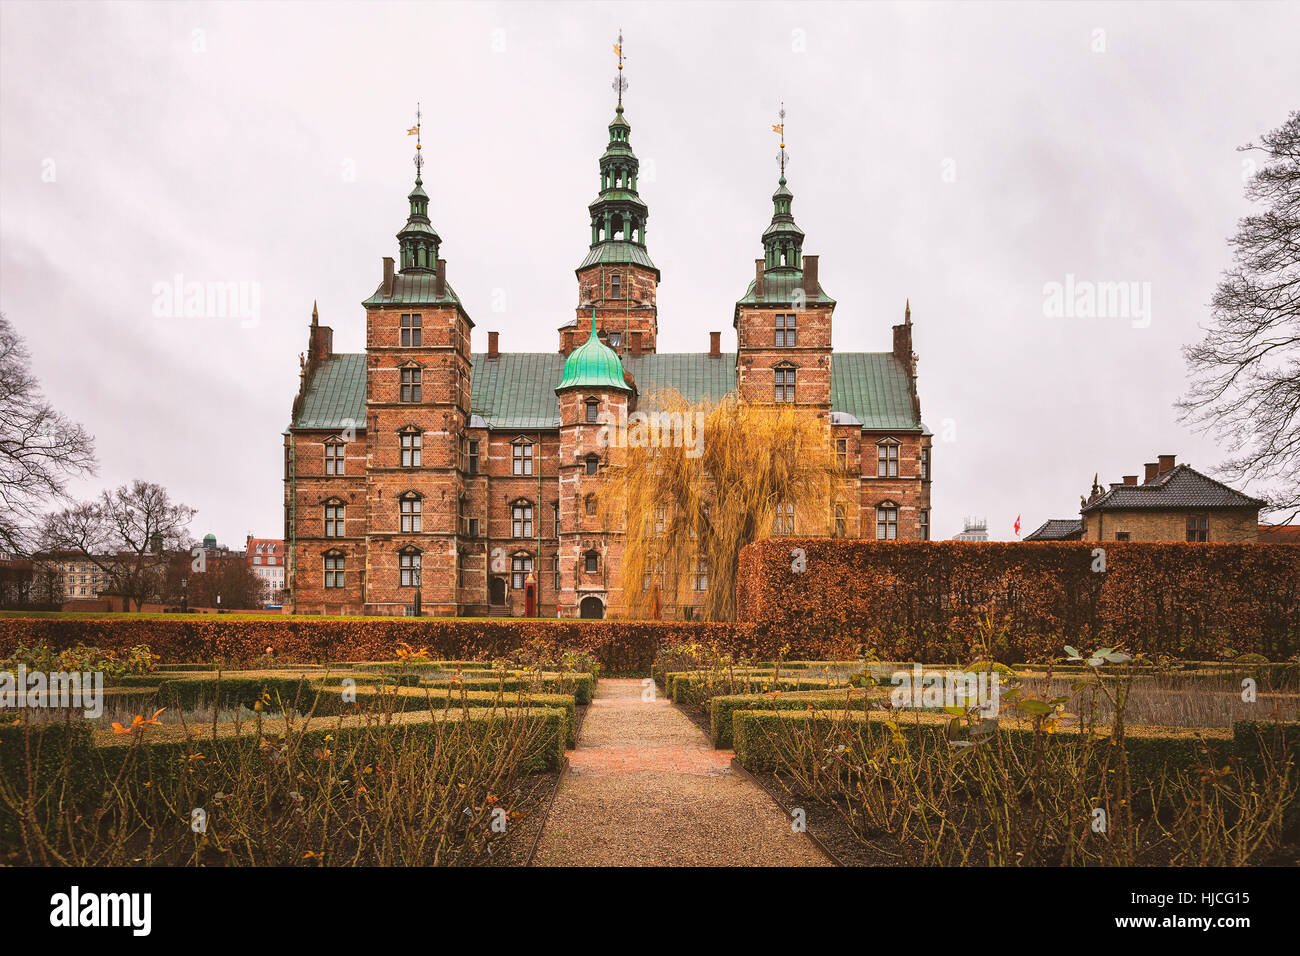 Bild von Schloss Rosenborg in Kopenhagen, Dänemark. Stockfoto